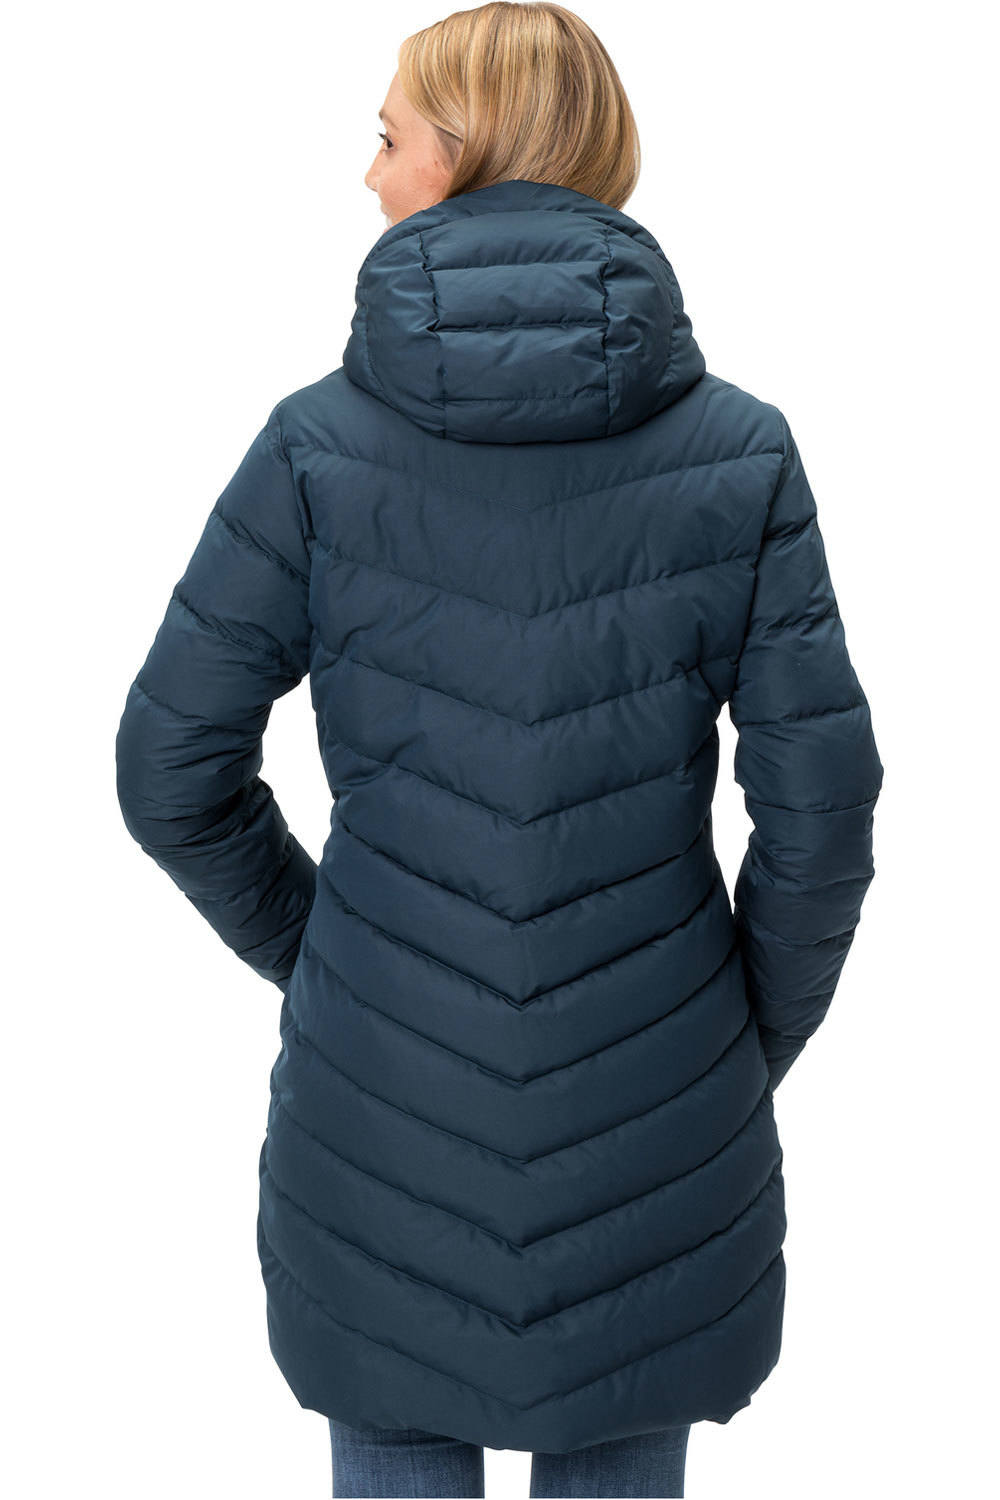 Vaude chaqueta outdoor mujer Womens Annecy Down Coat vista trasera